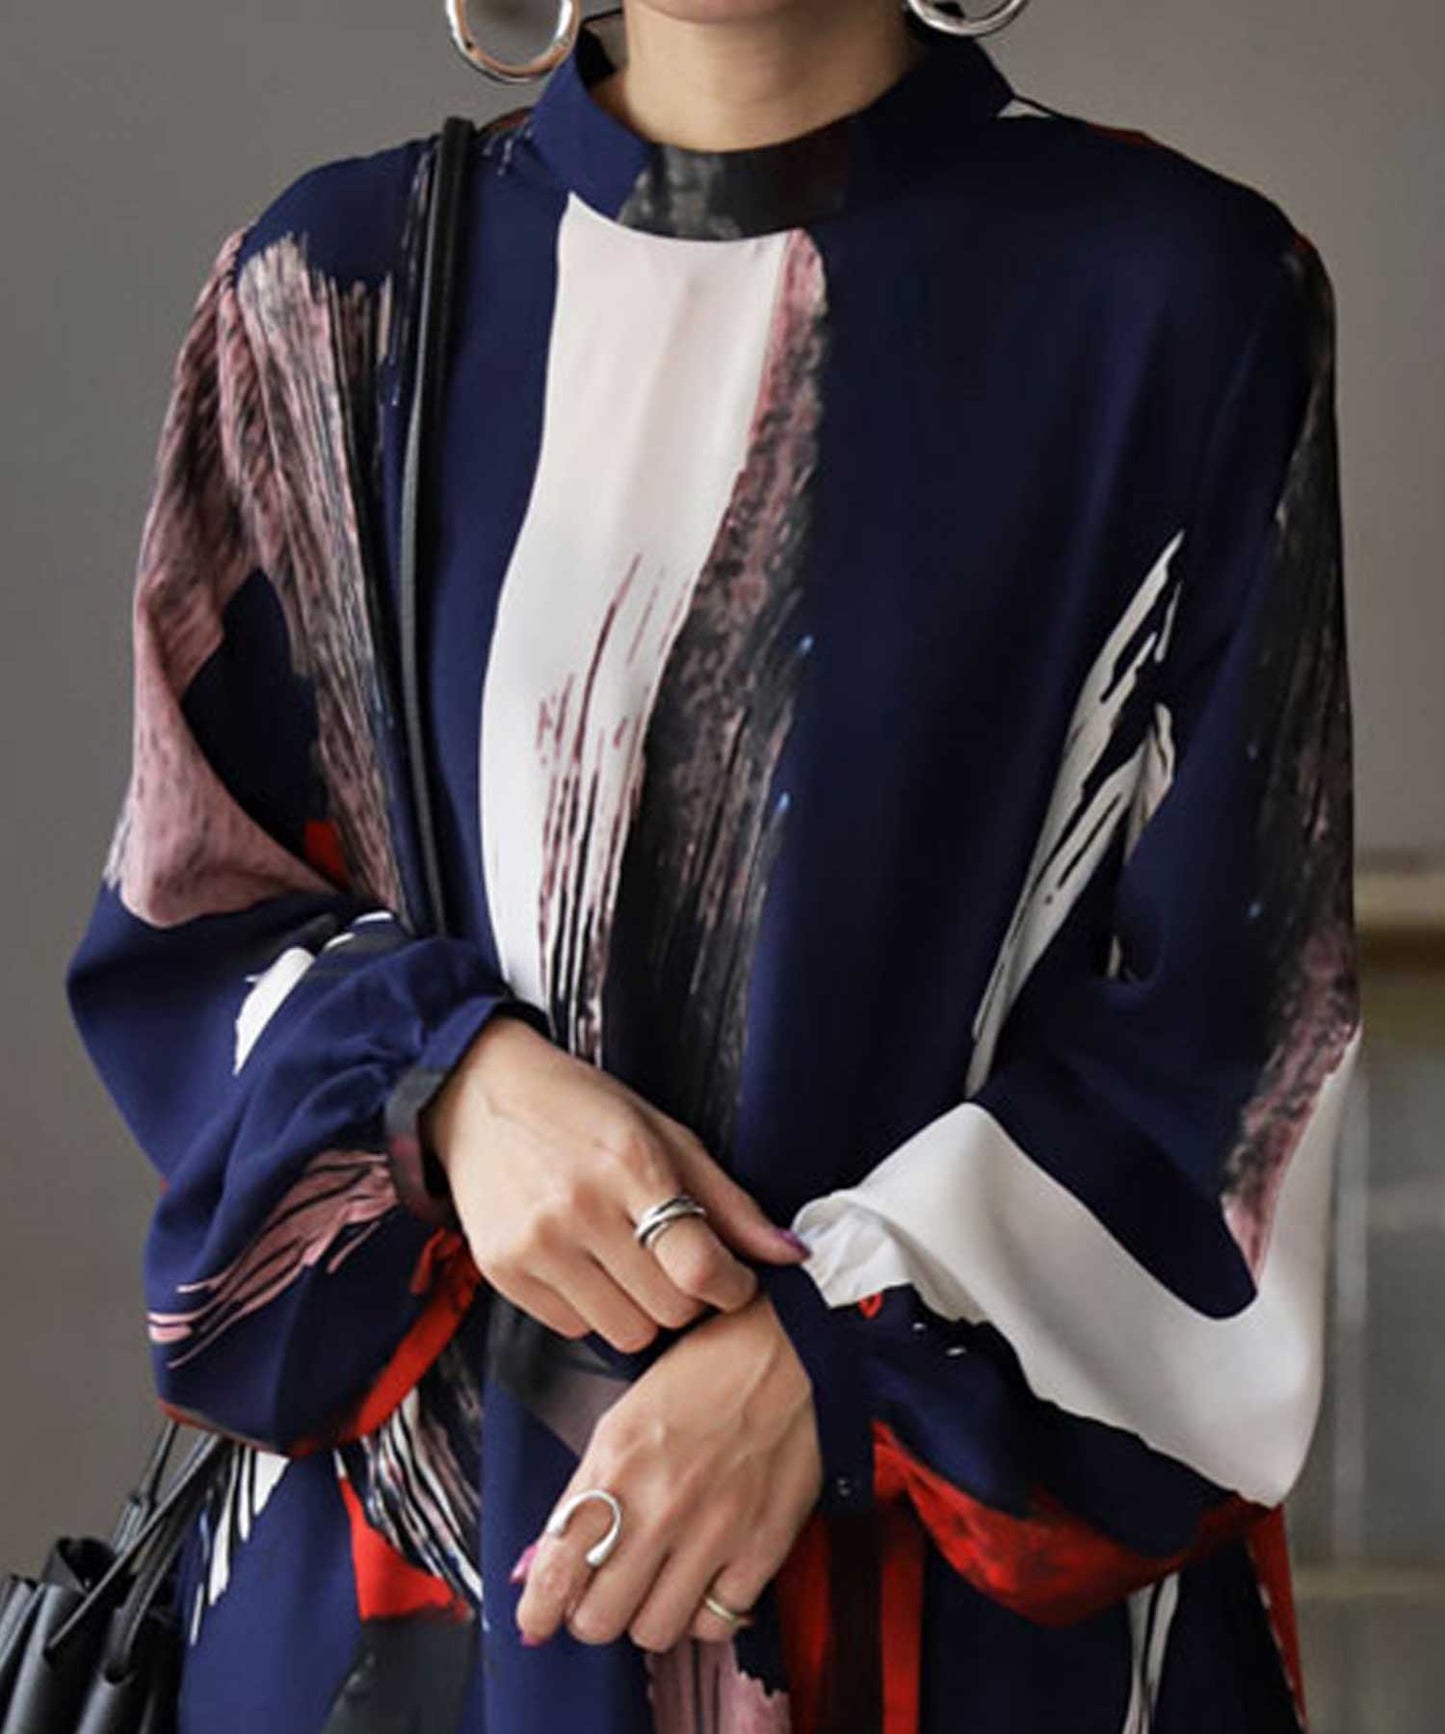 Whole pattern Casual dress Long-Sleeve Maxi Length